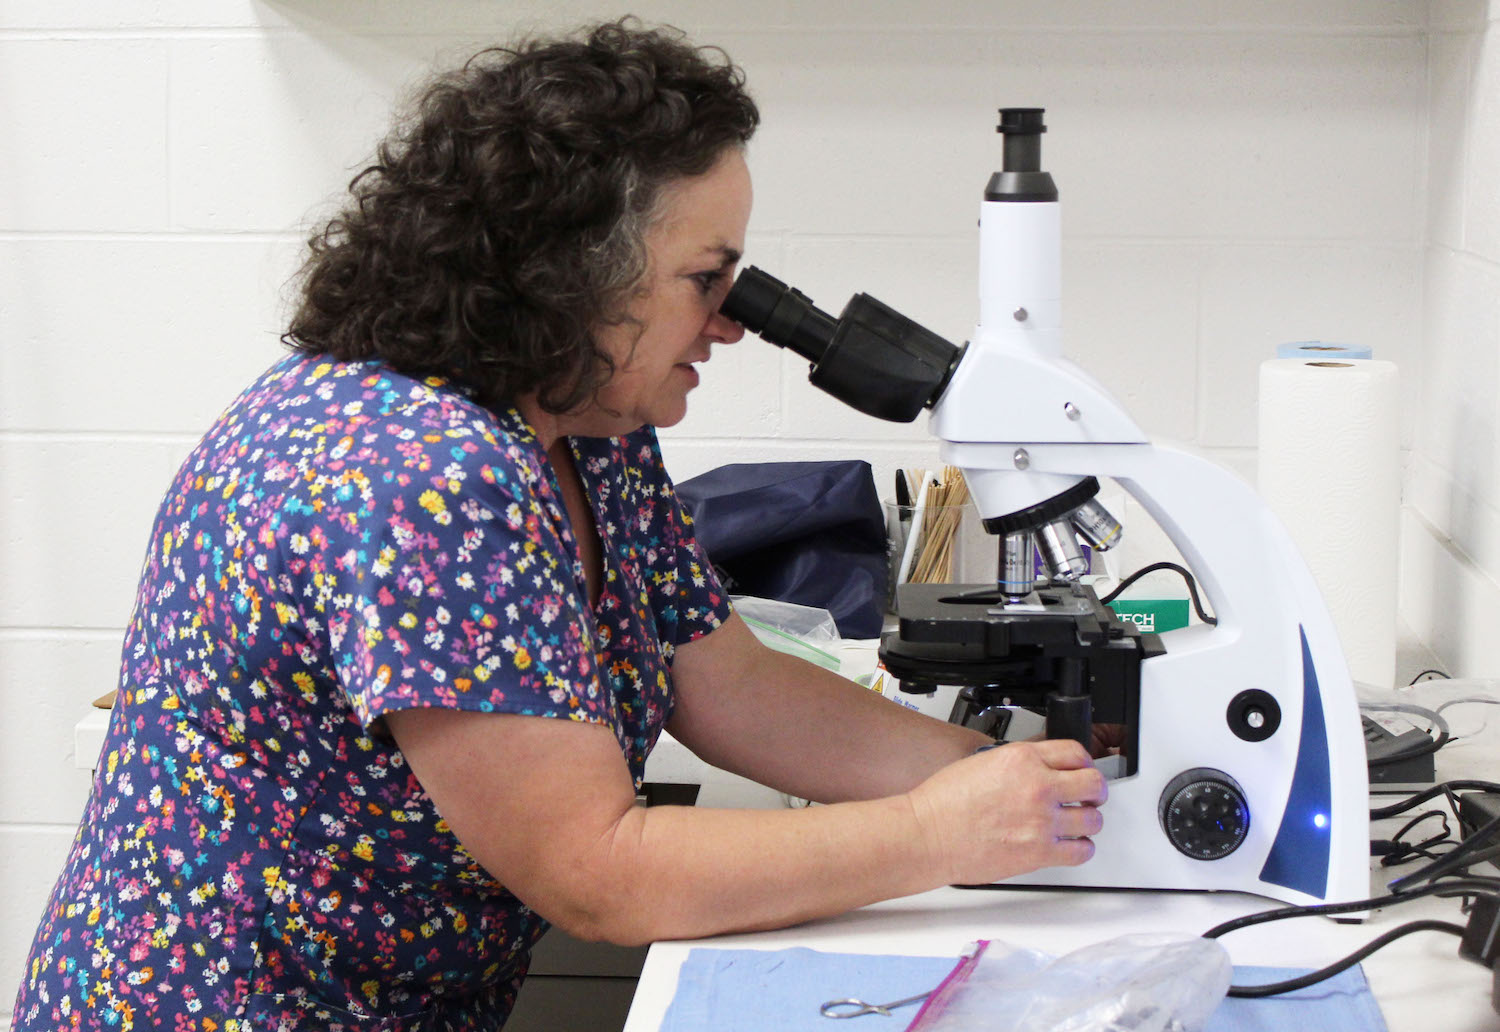 Amy McDaniel looks into a microscope